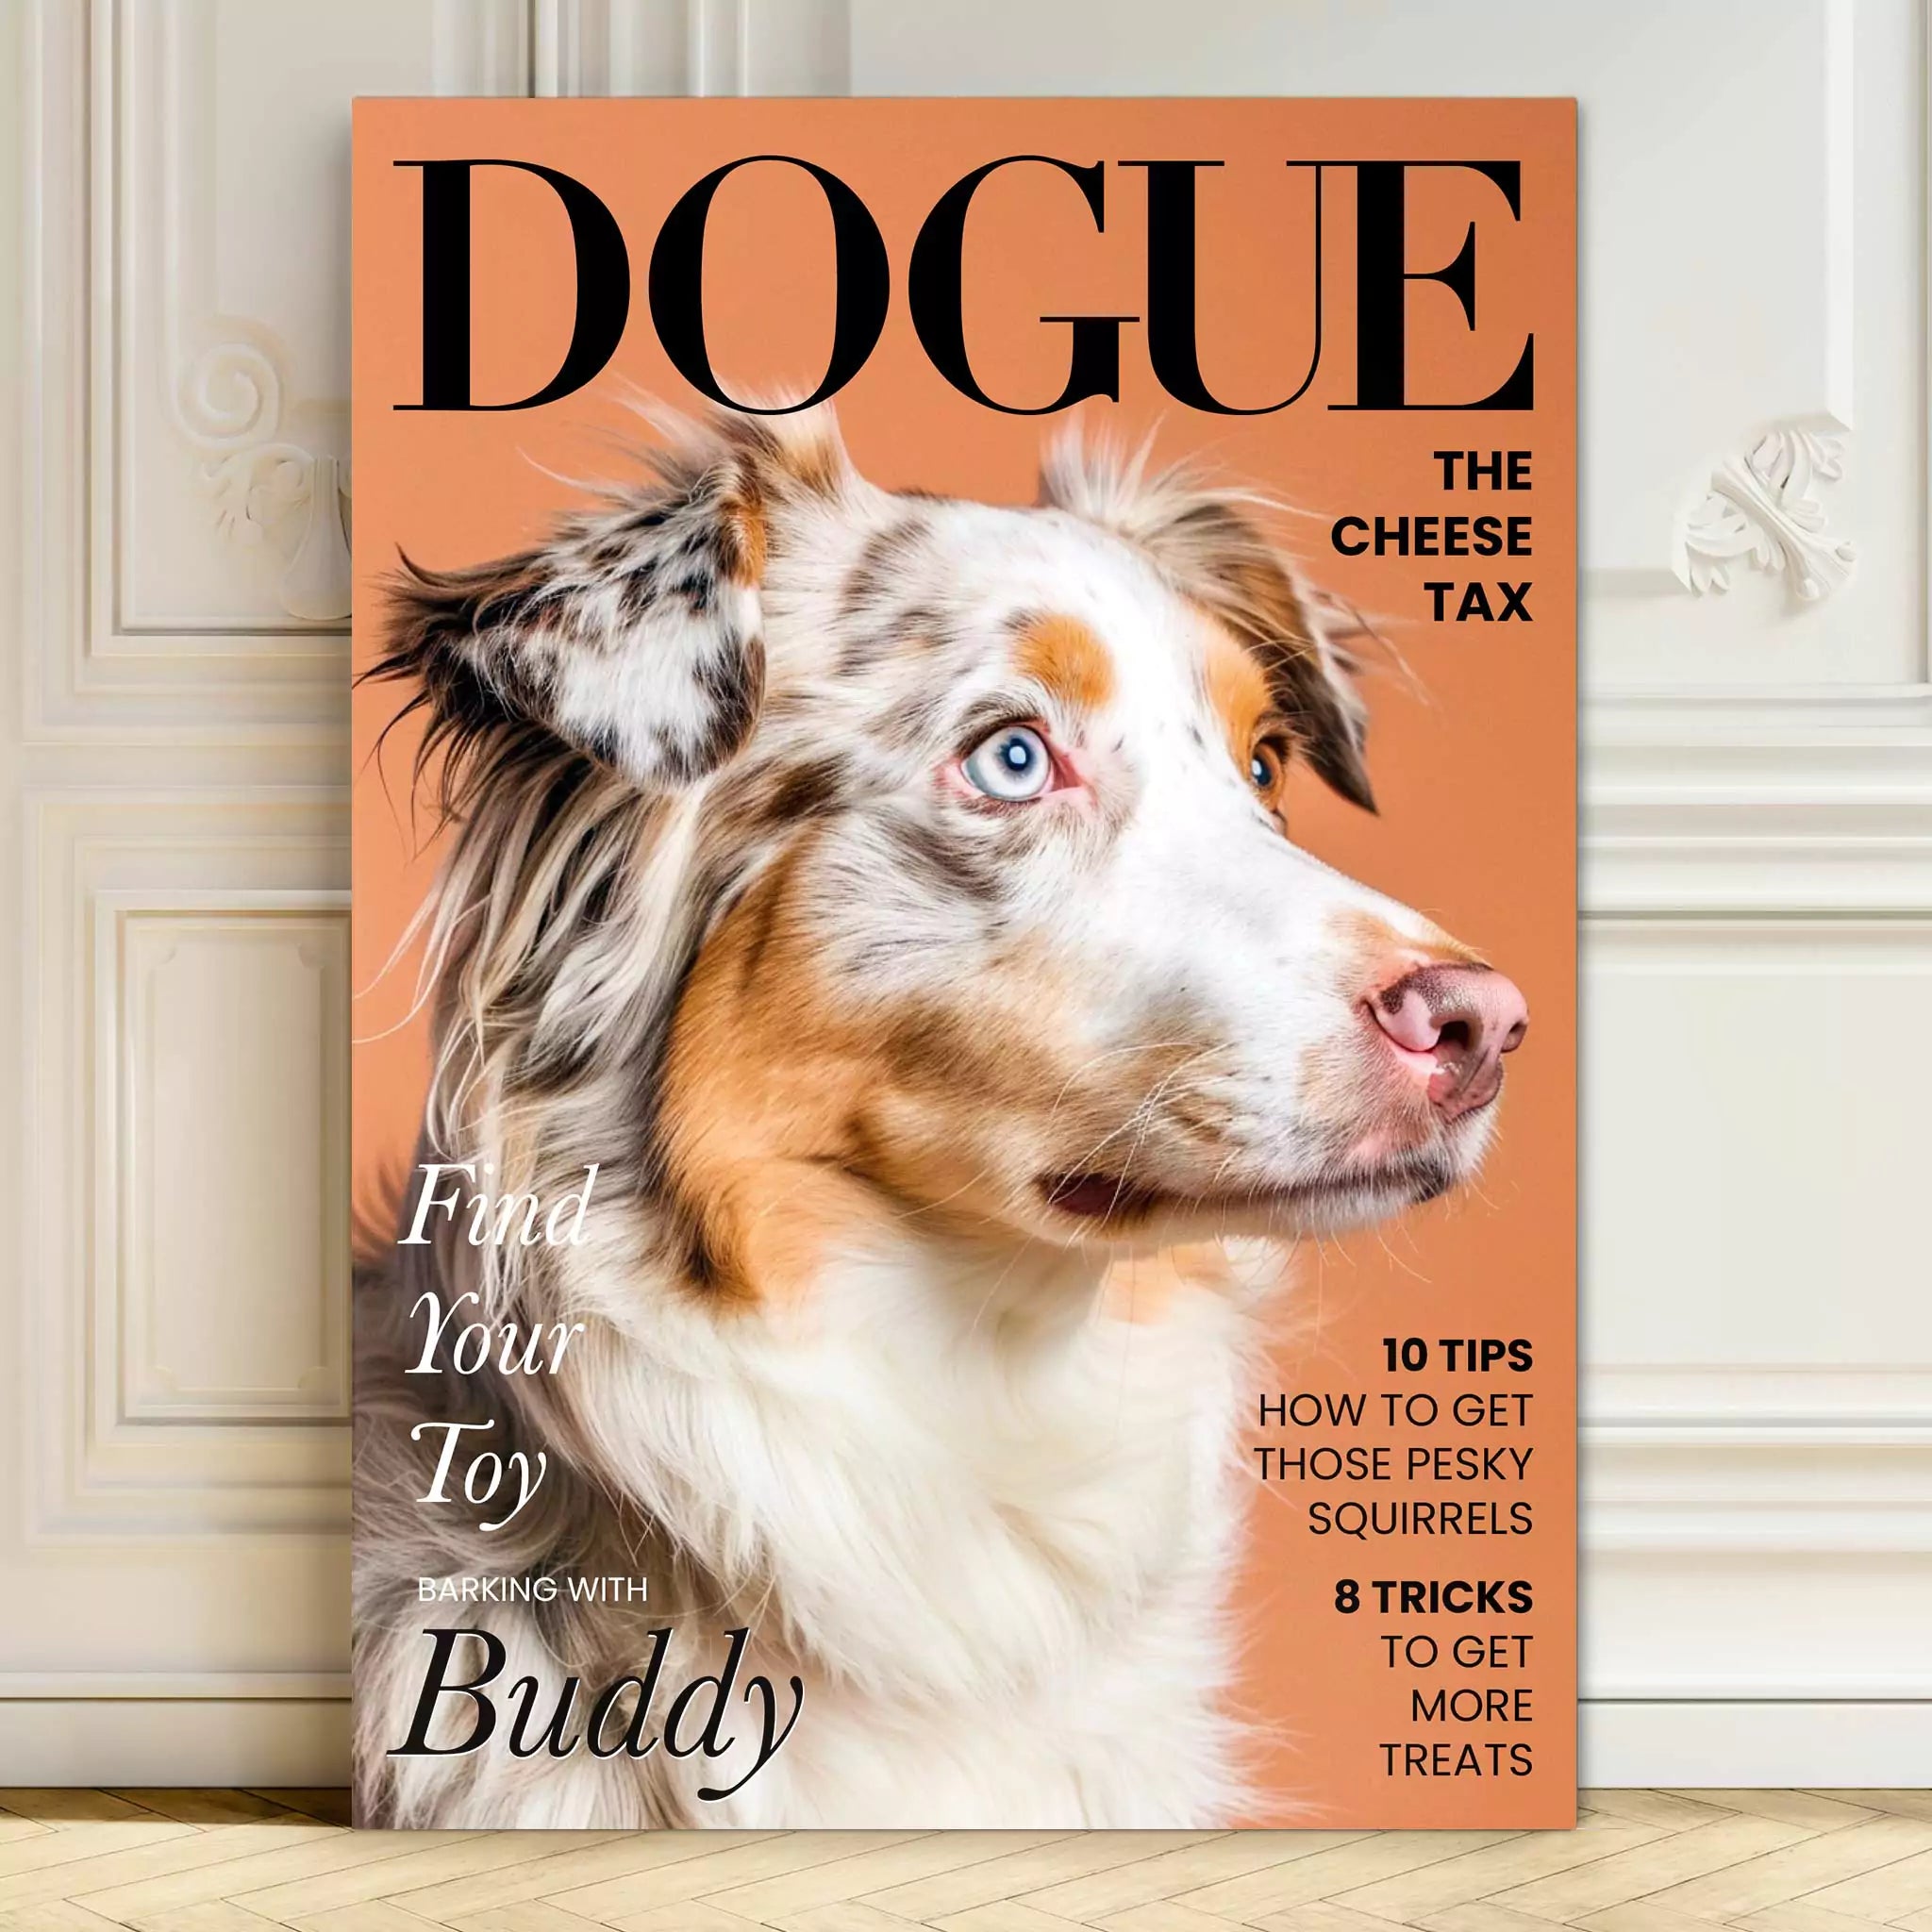 dogue print, dogue photo, dogue magazine